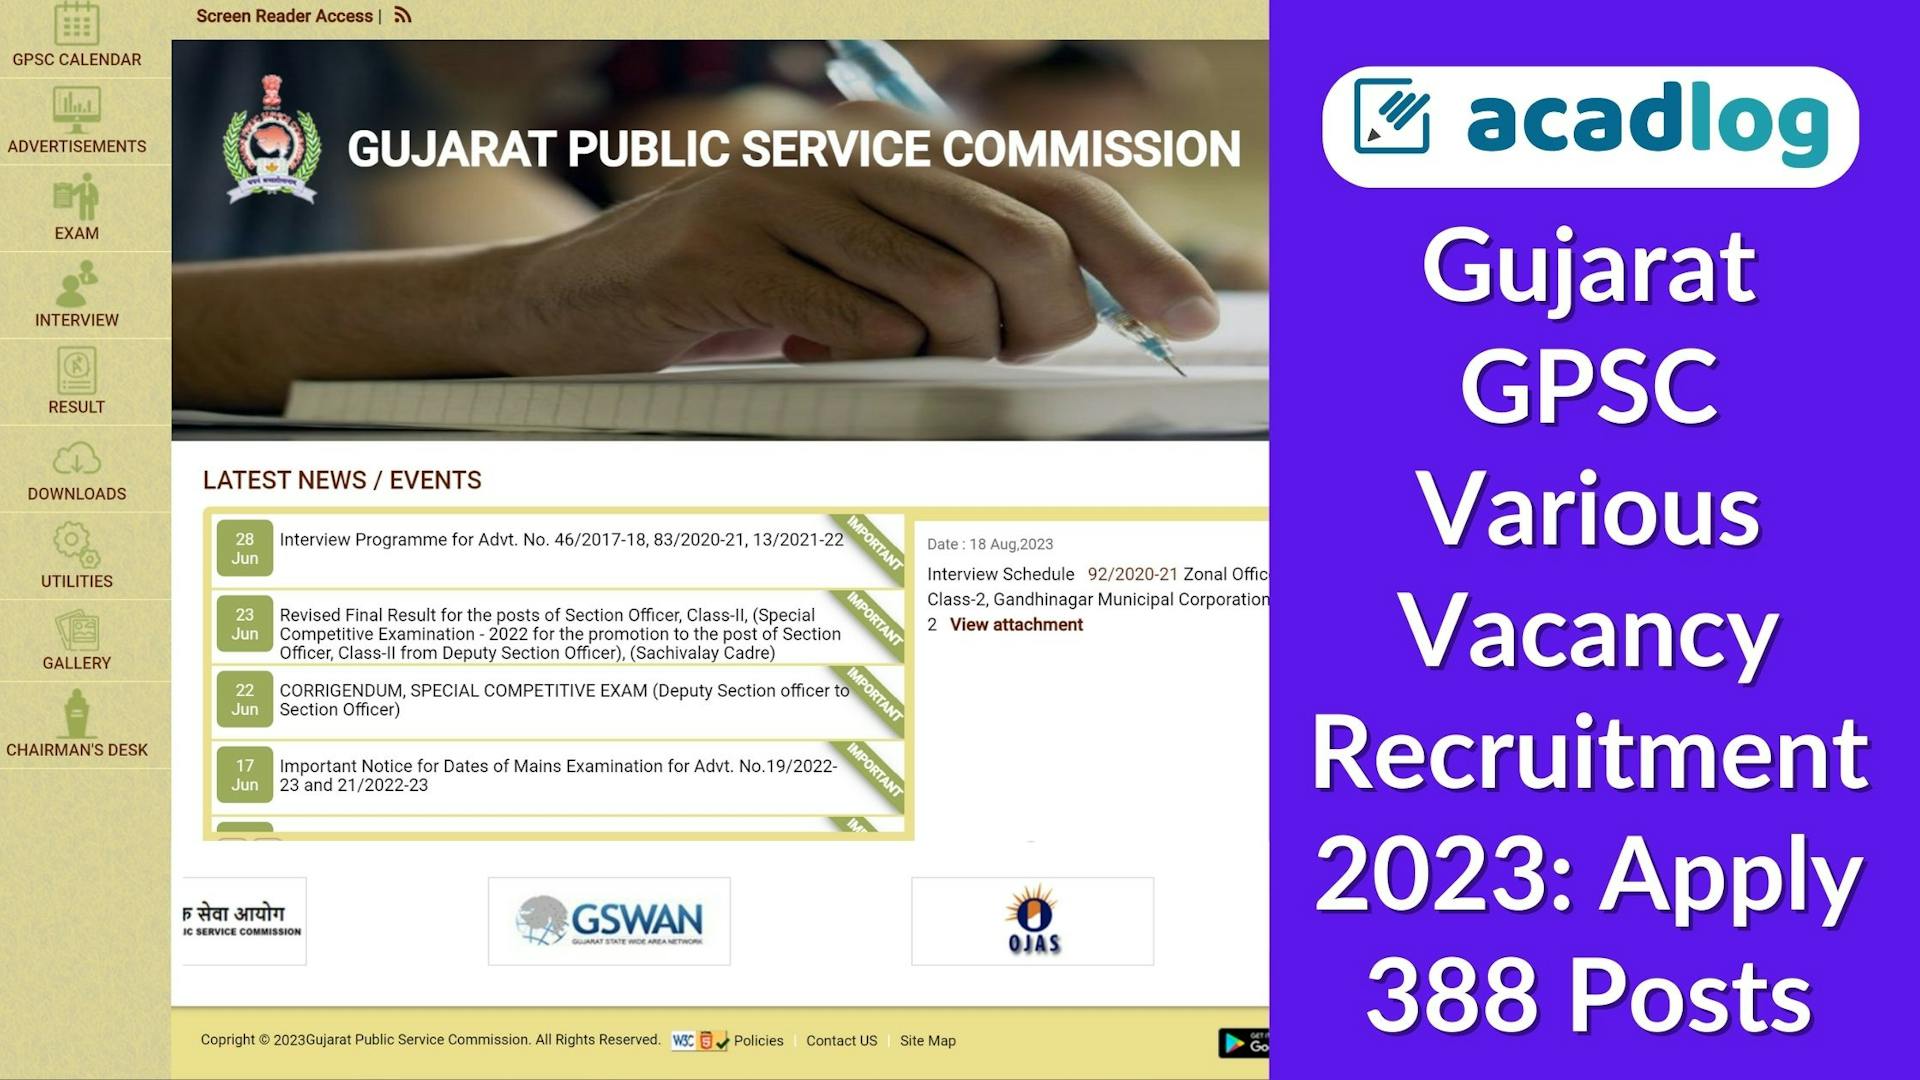 Gujarat Govt Jobs: GPSC Various Vacancy Recruitment 2023